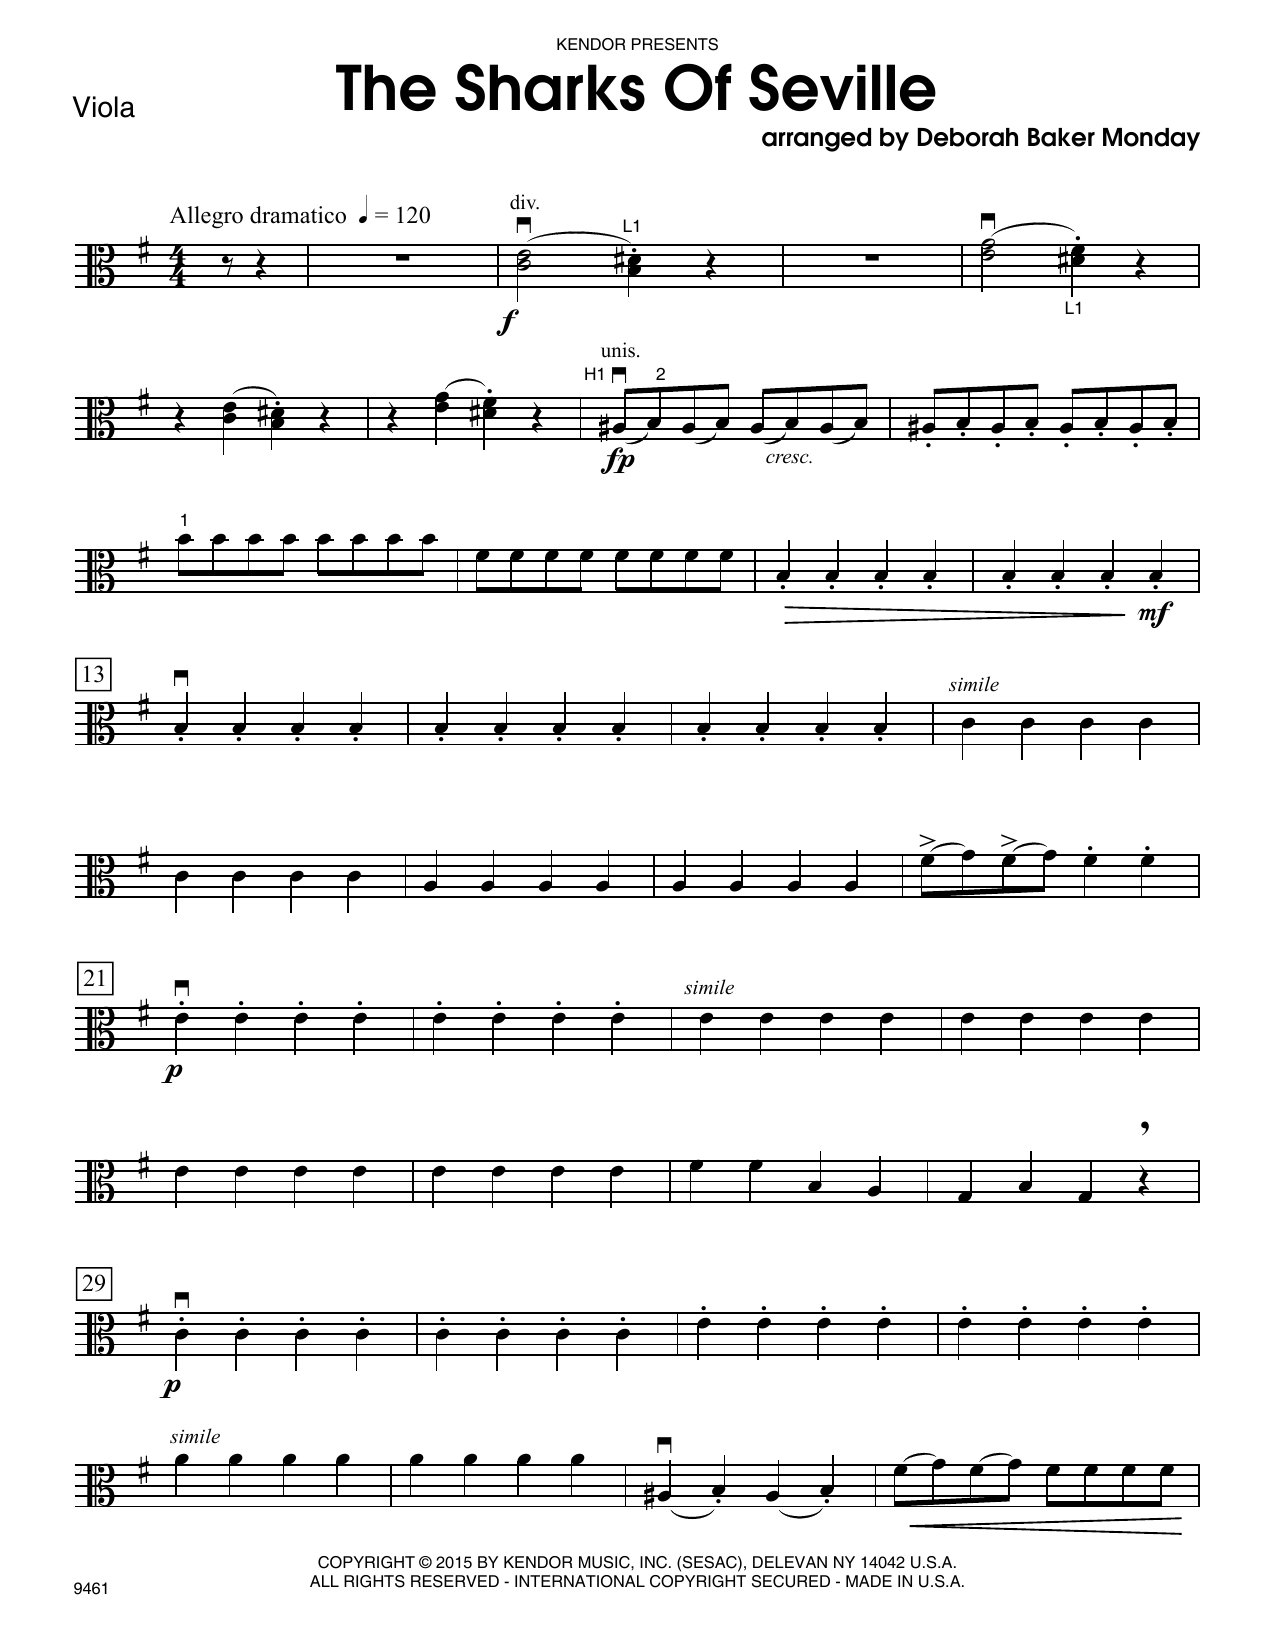 The Sharks Of Seville - Viola sheet music